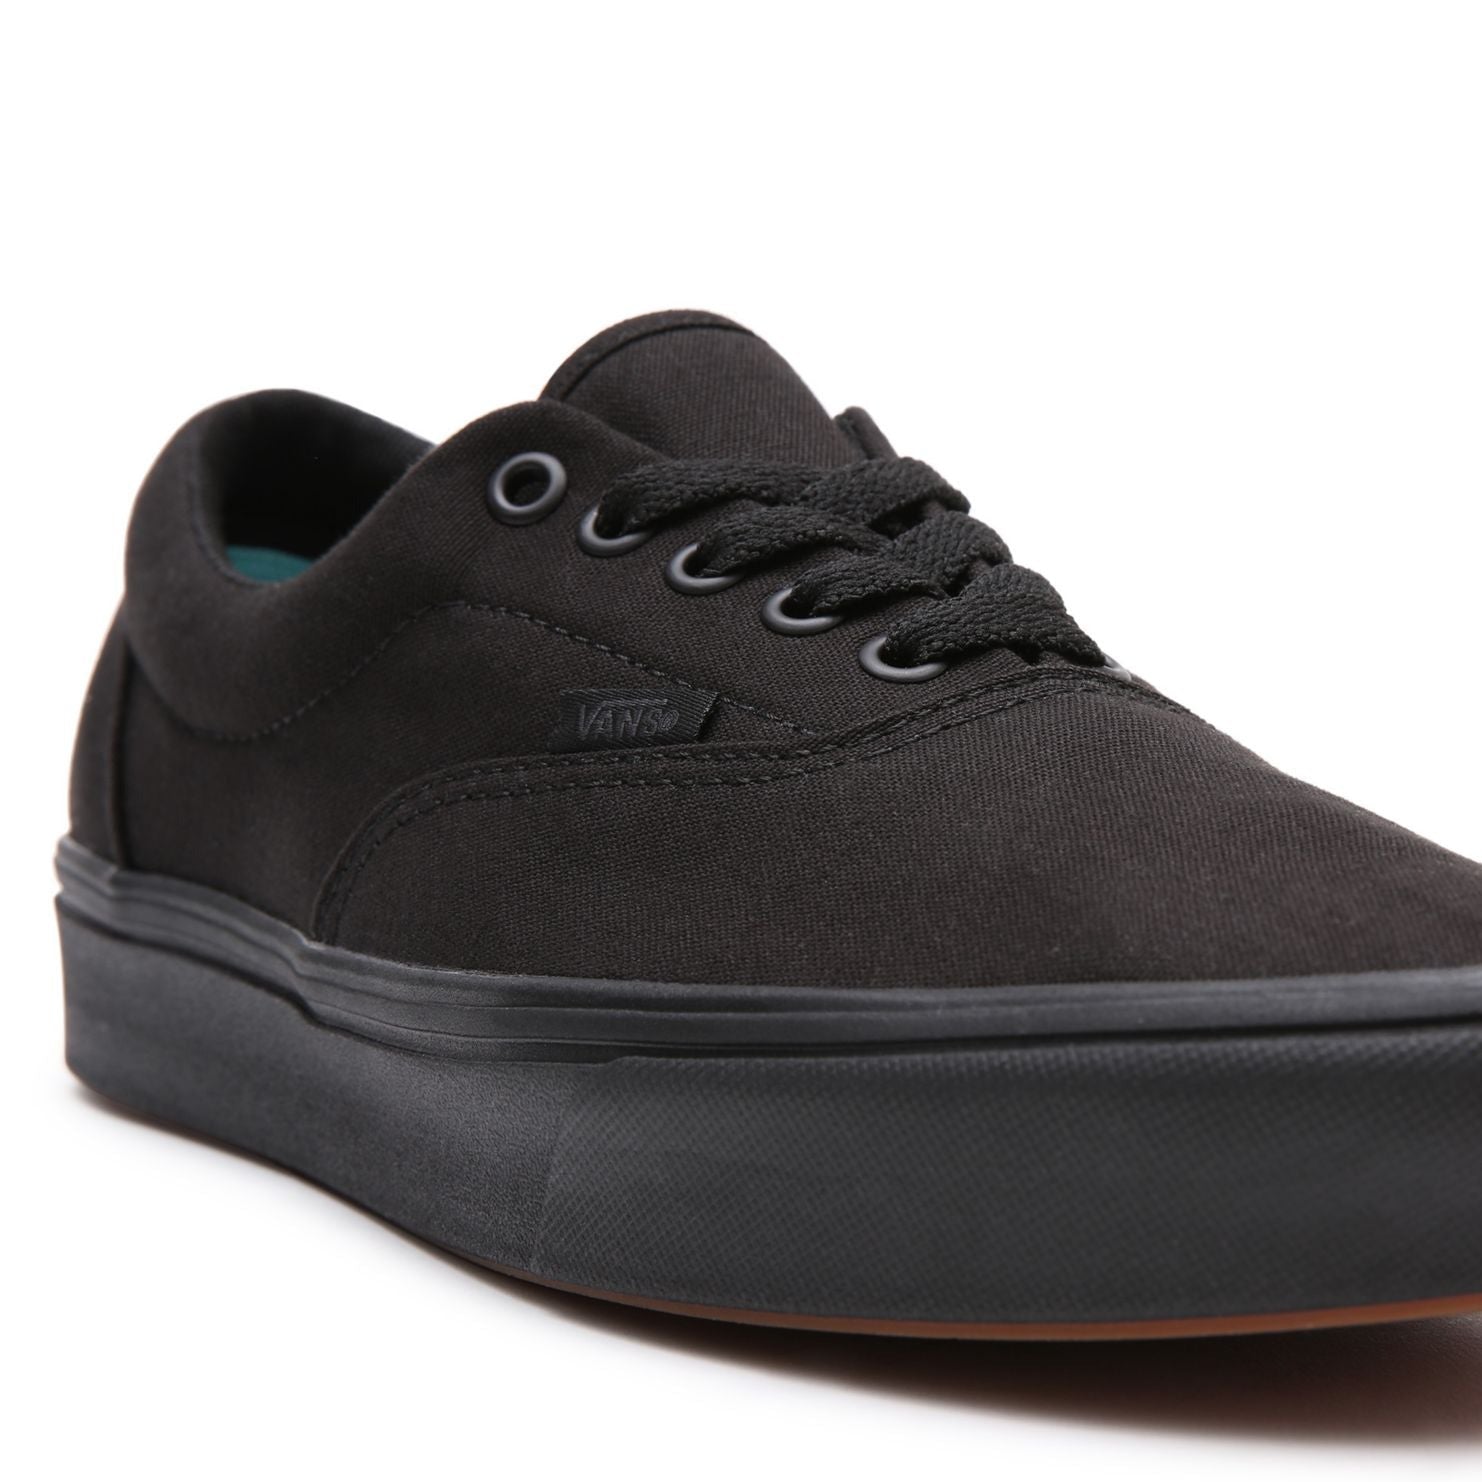 Vans ComfyCush Era VN0A3WM9VND1 adult sneakers shoe in black